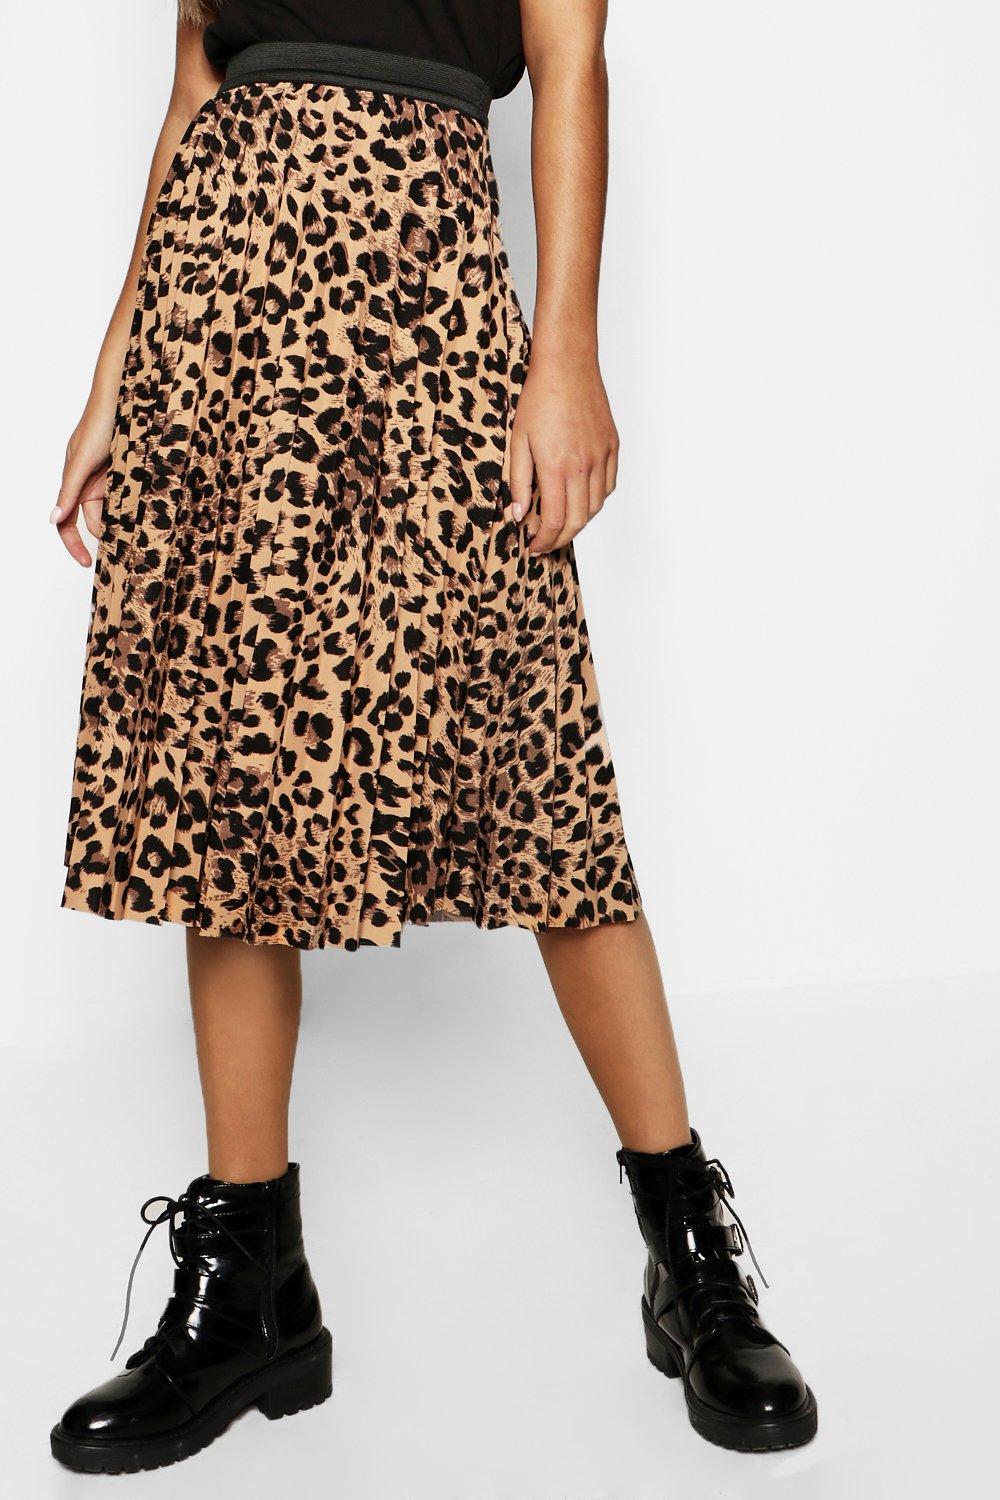 Falda midi plisada con estampado de leopardo |